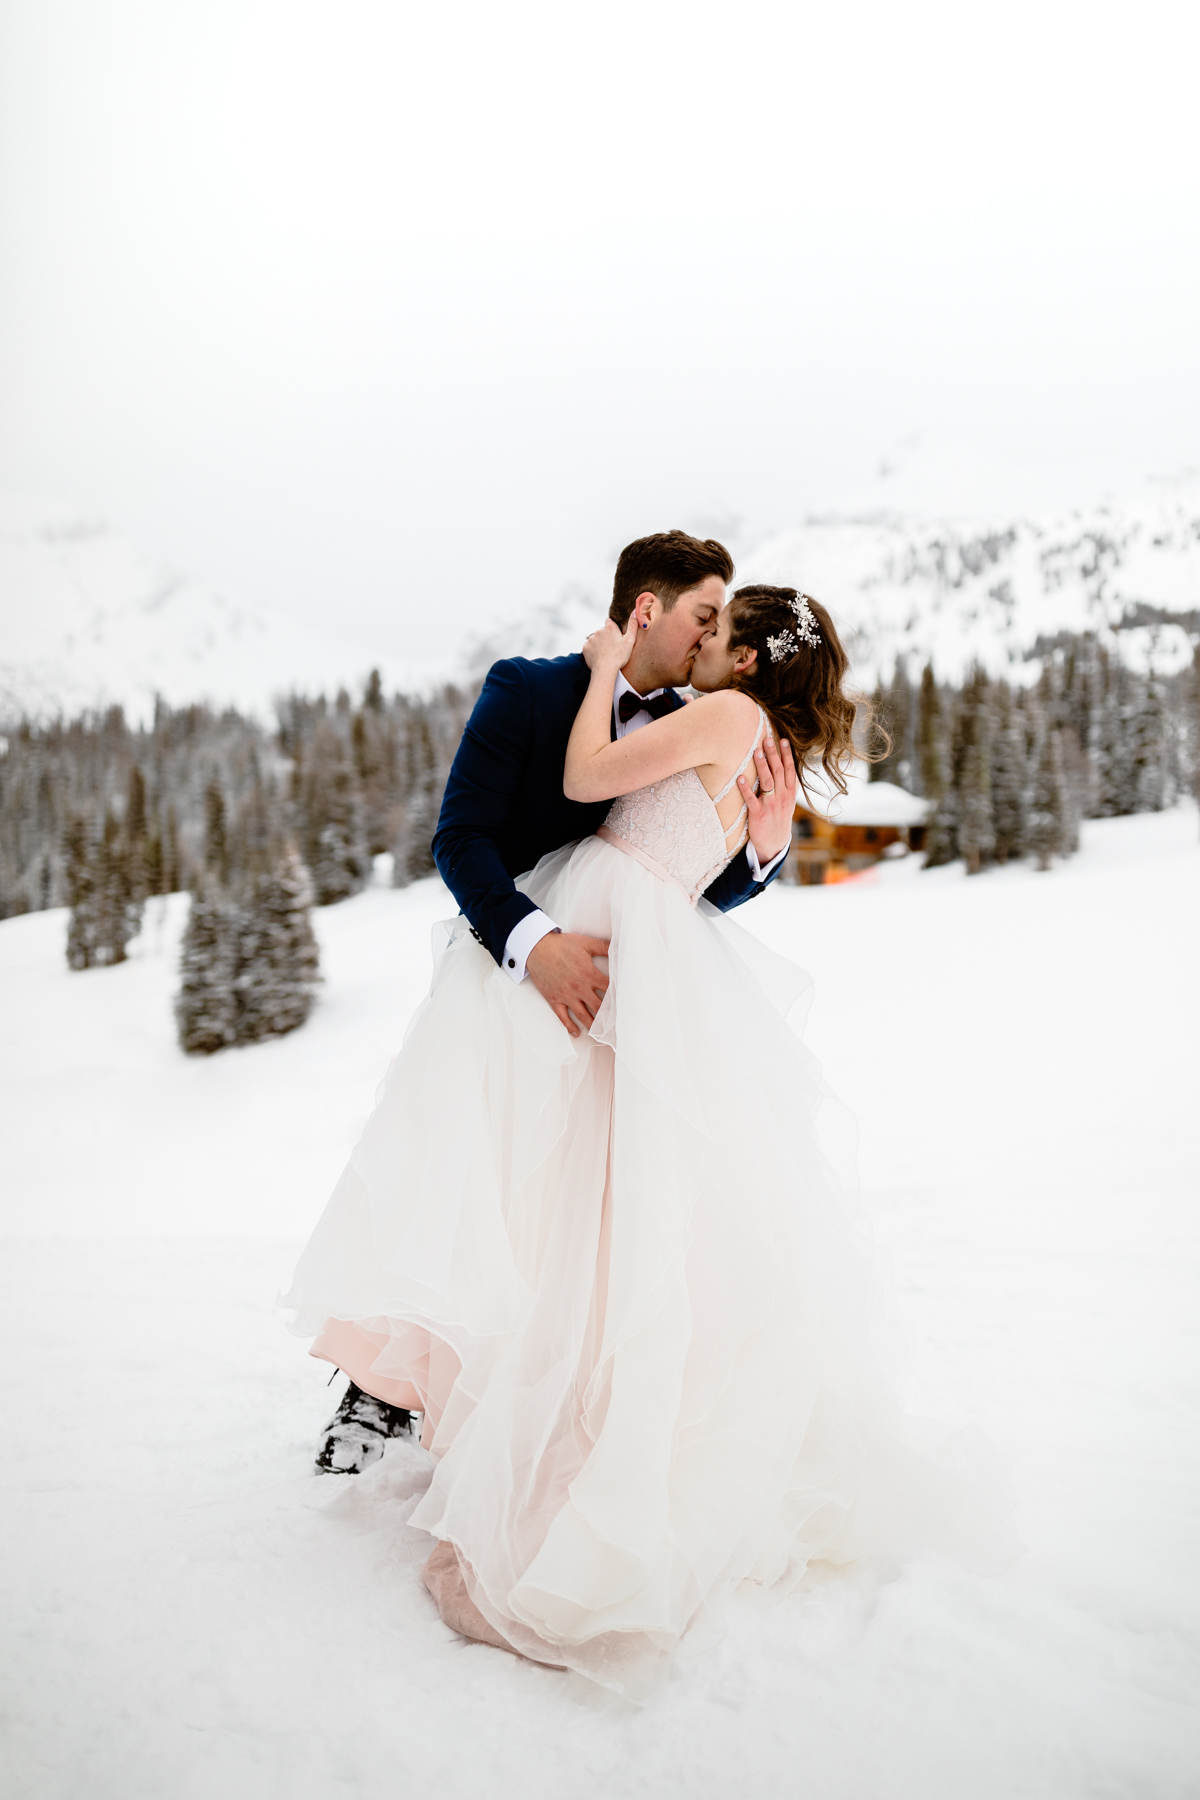 Ski Wedding Photos at Sunshine Village in Banff - Image 35